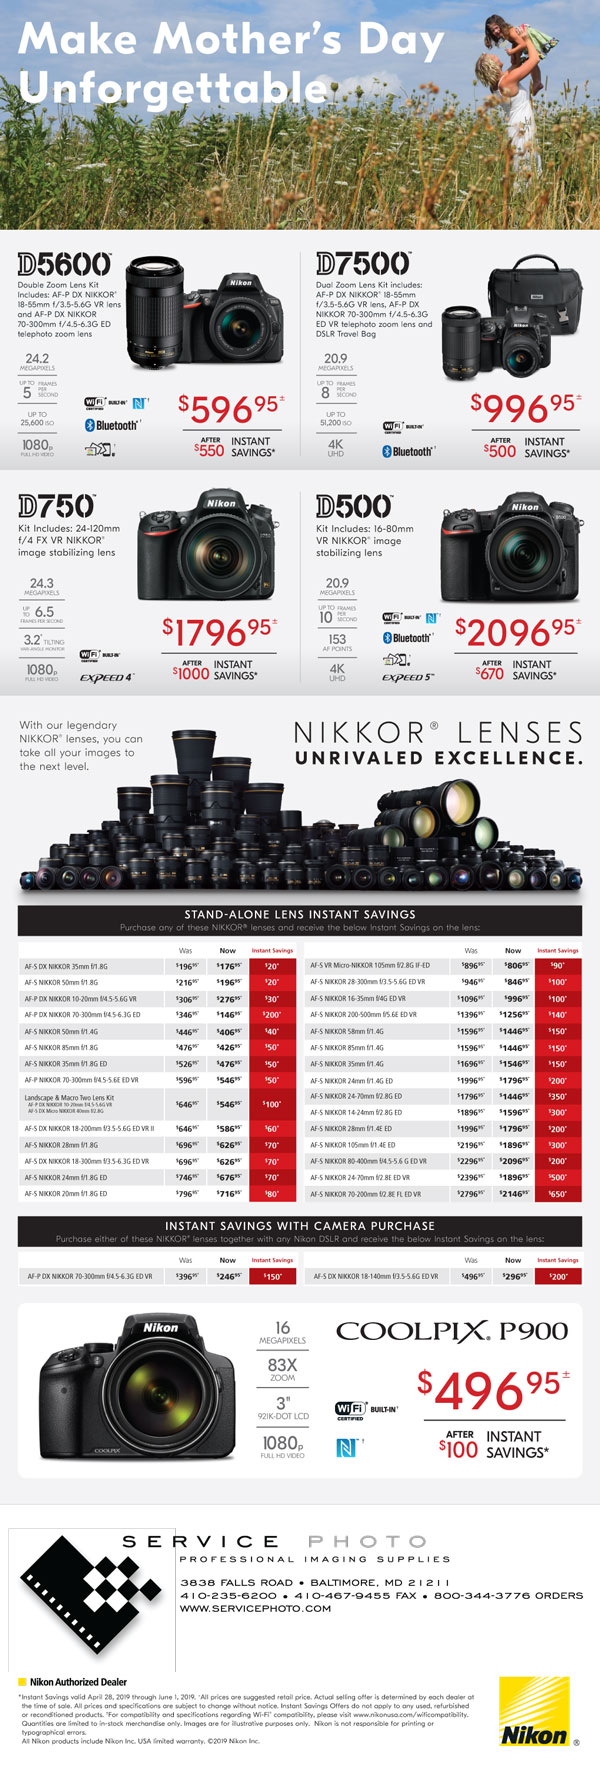 full-list-of-nikon-lens-rebates-coming-this-weekend-nikon-rumors